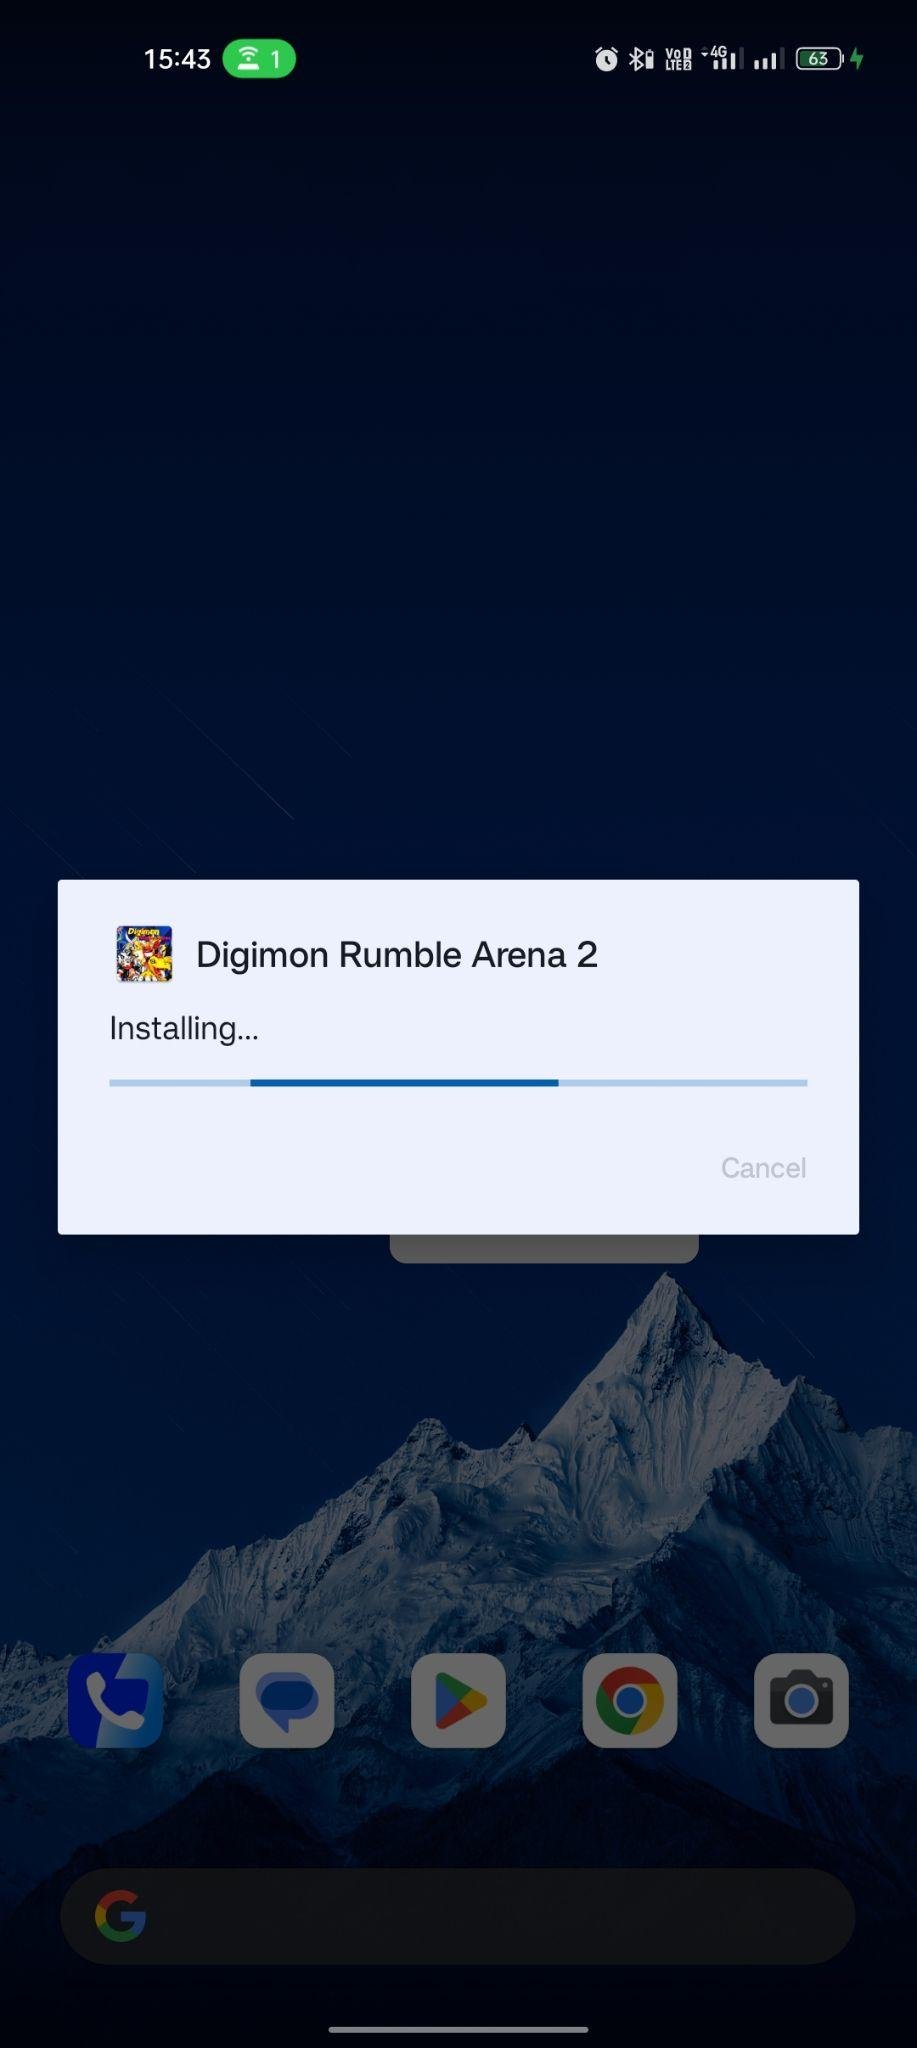 Digimon Rumble Arena 2 apk installing